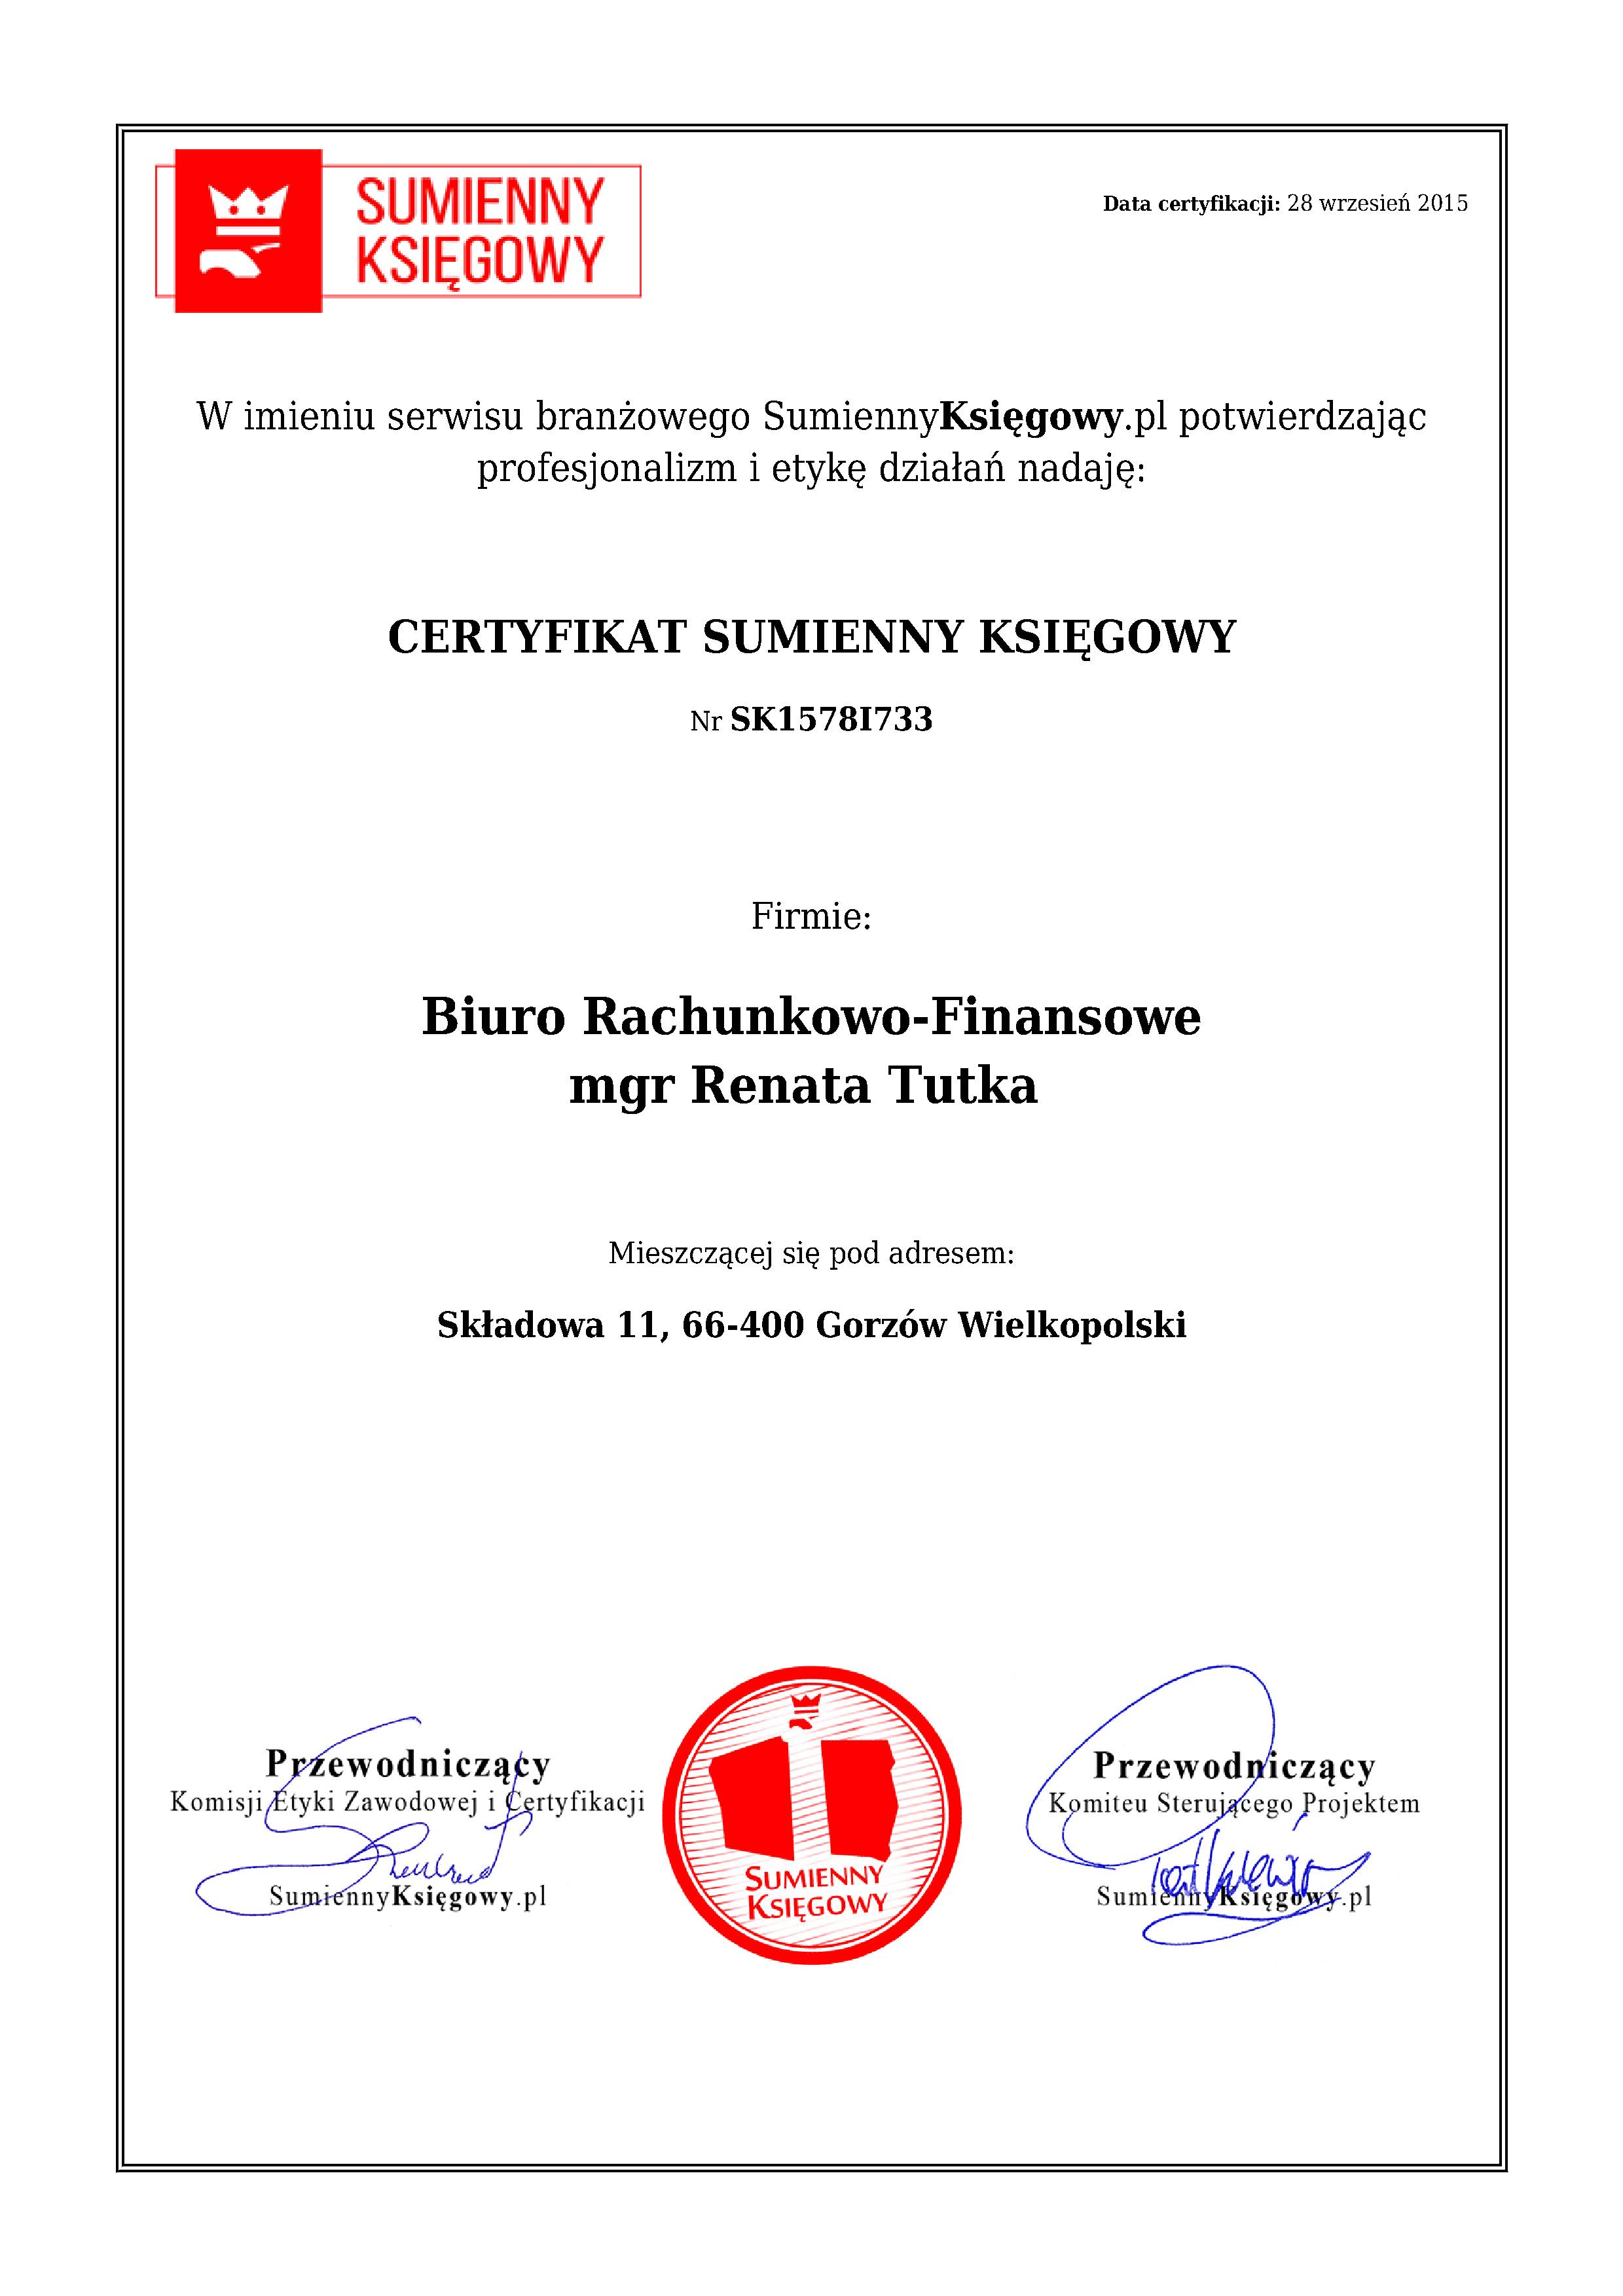 Biuro Rachunkowo-Finansowe mgr Renata Tutka  certyfikat 1